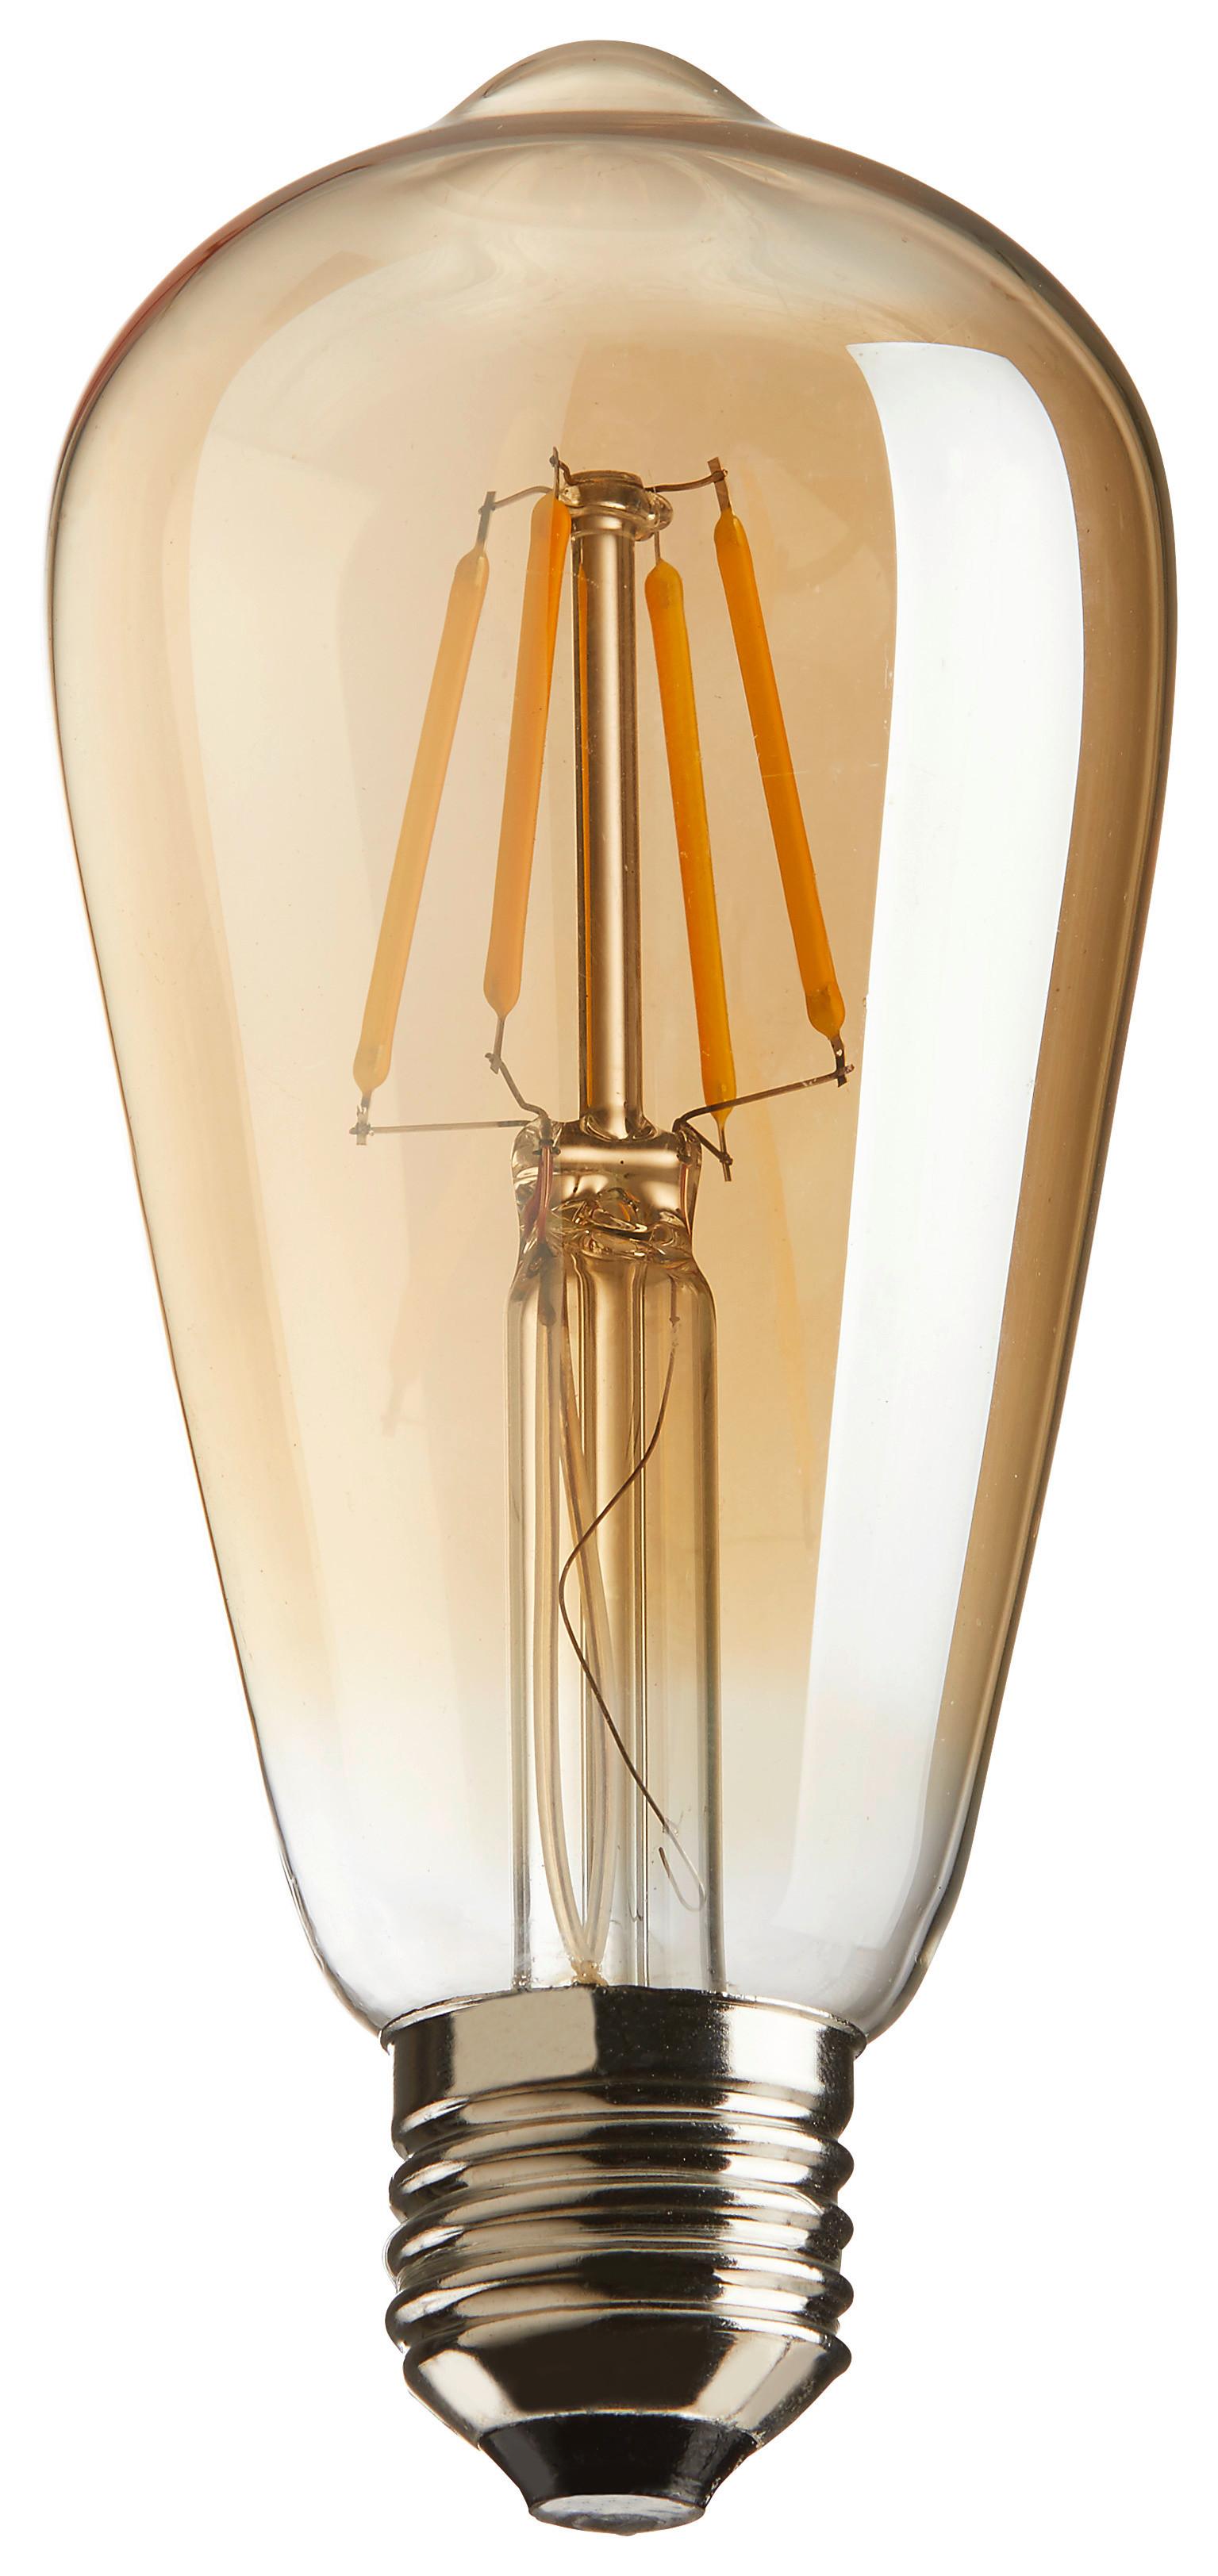 Led-sijalka C80324mm - zlata, steklo - Modern Living